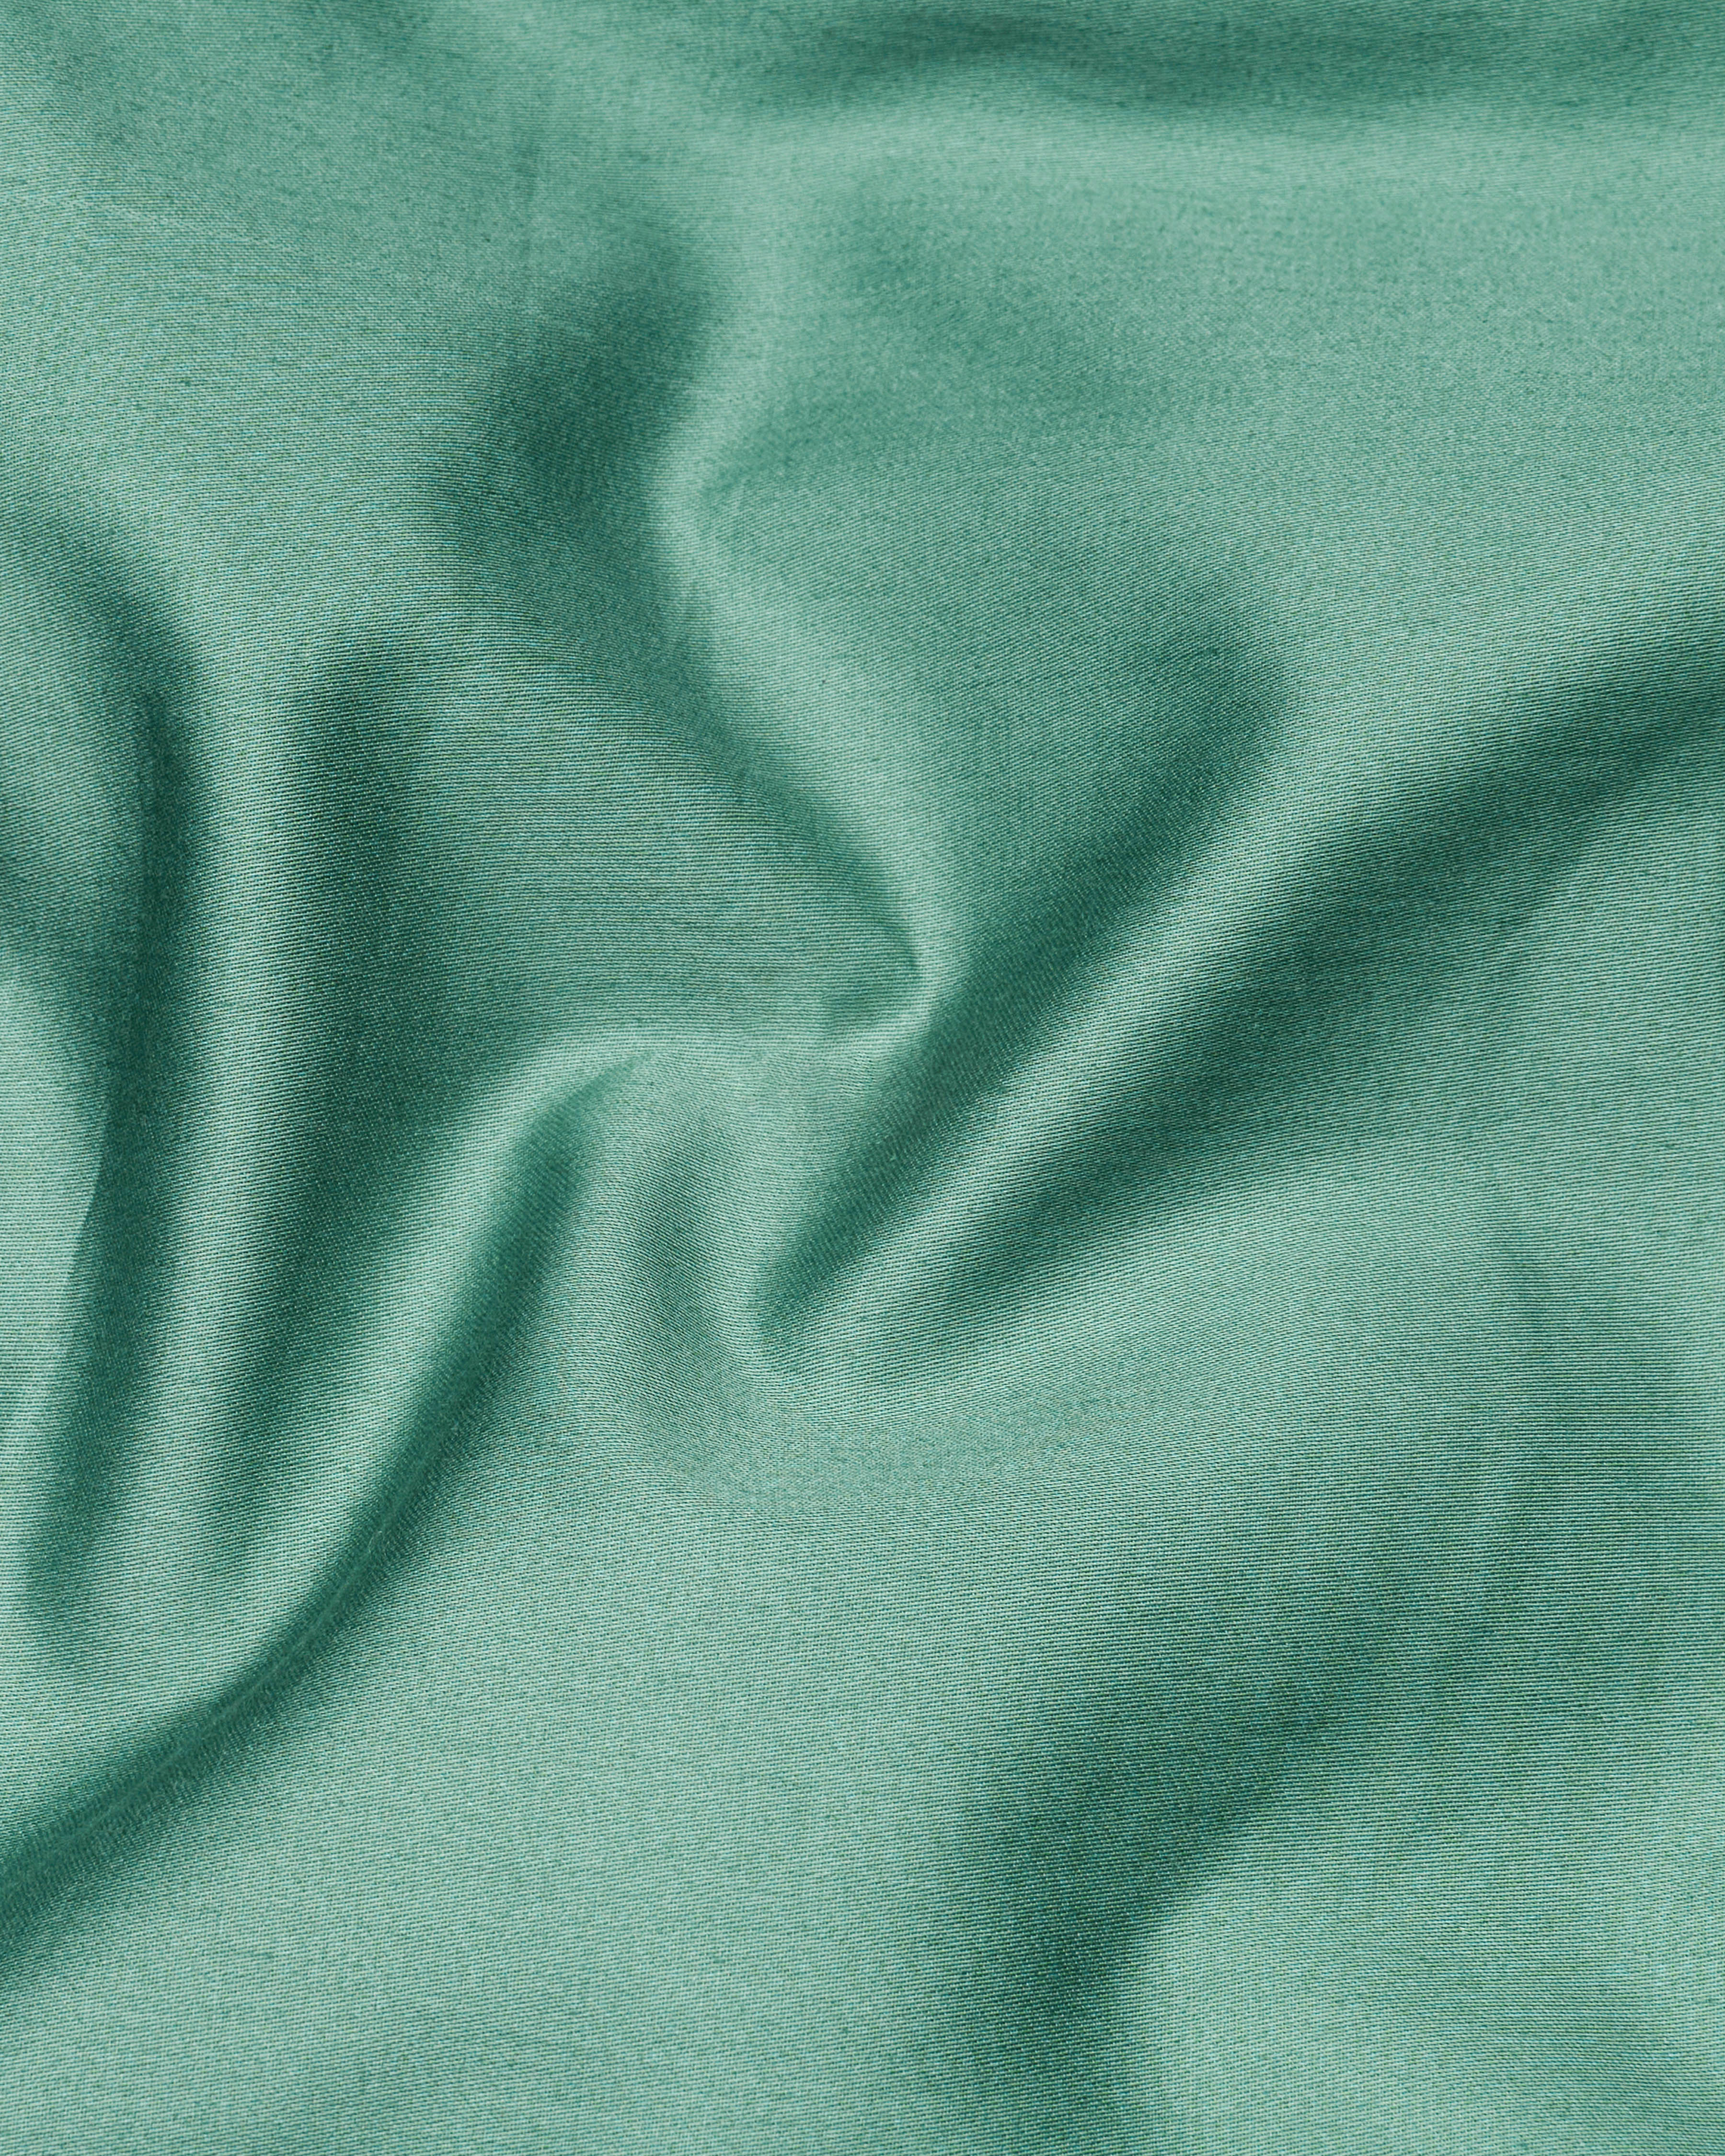 Patina Green Super Soft Premium Cotton Shirt  8681-BLK-38,8681-BLK-H-38,8681-BLK-39,8681-BLK-H-39,8681-BLK-40,8681-BLK-H-40,8681-BLK-42,8681-BLK-H-42,8681-BLK-44,8681-BLK-H-44,8681-BLK-46,8681-BLK-H-46,8681-BLK-48,8681-BLK-H-48,8681-BLK-50,8681-BLK-H-50,8681-BLK-52,8681-BLK-H-52